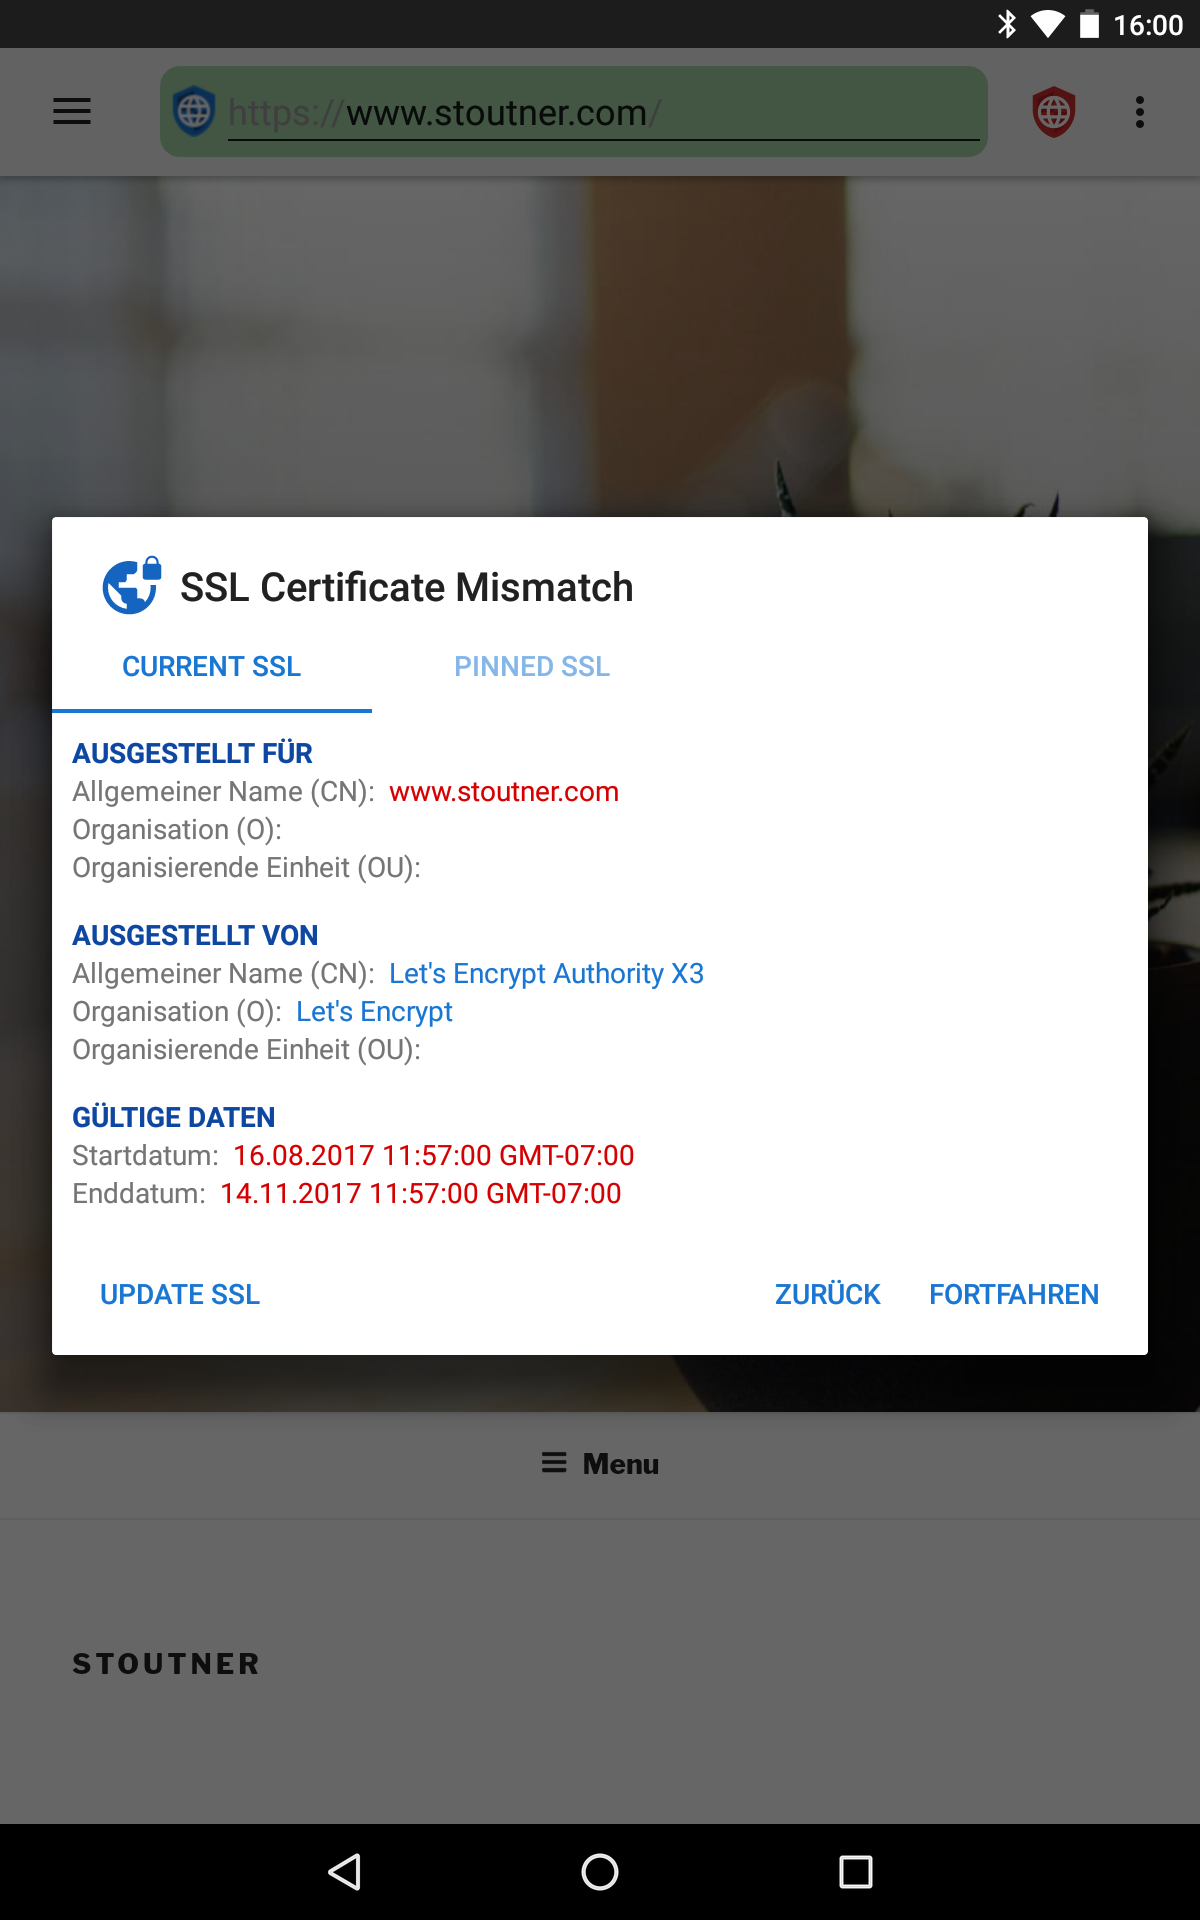 fastlane/metadata/android/de/sevenInchScreenshots/02 - SSL Certificate Mismatch - de.png